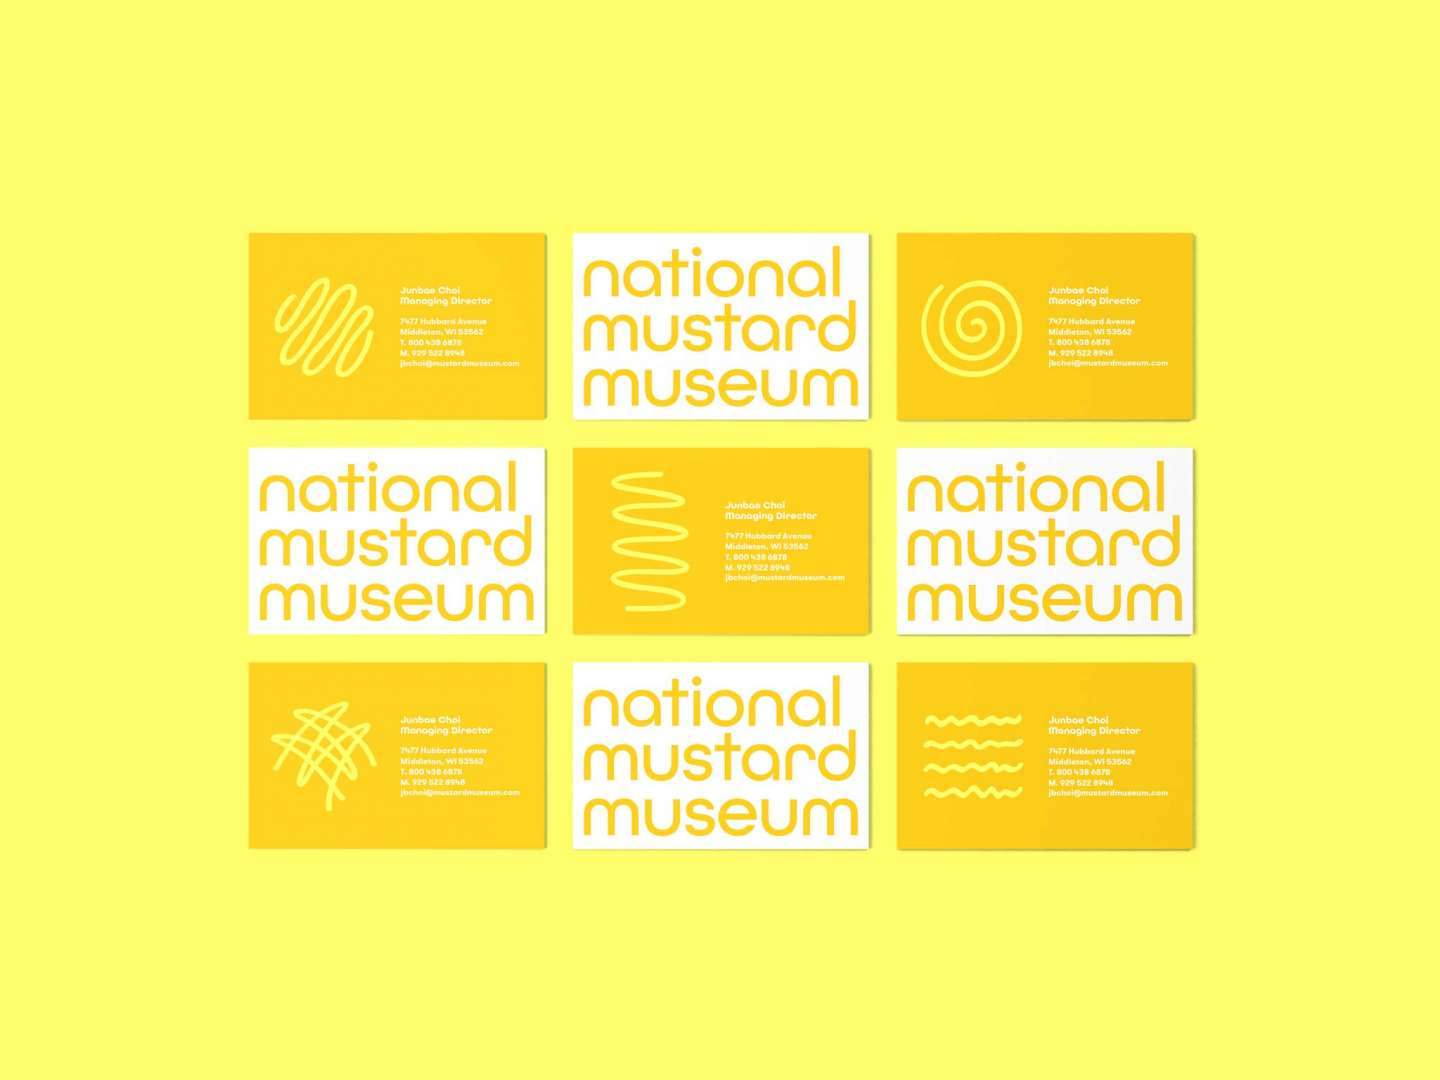 NATIONAL MUSTARD MUSEUM